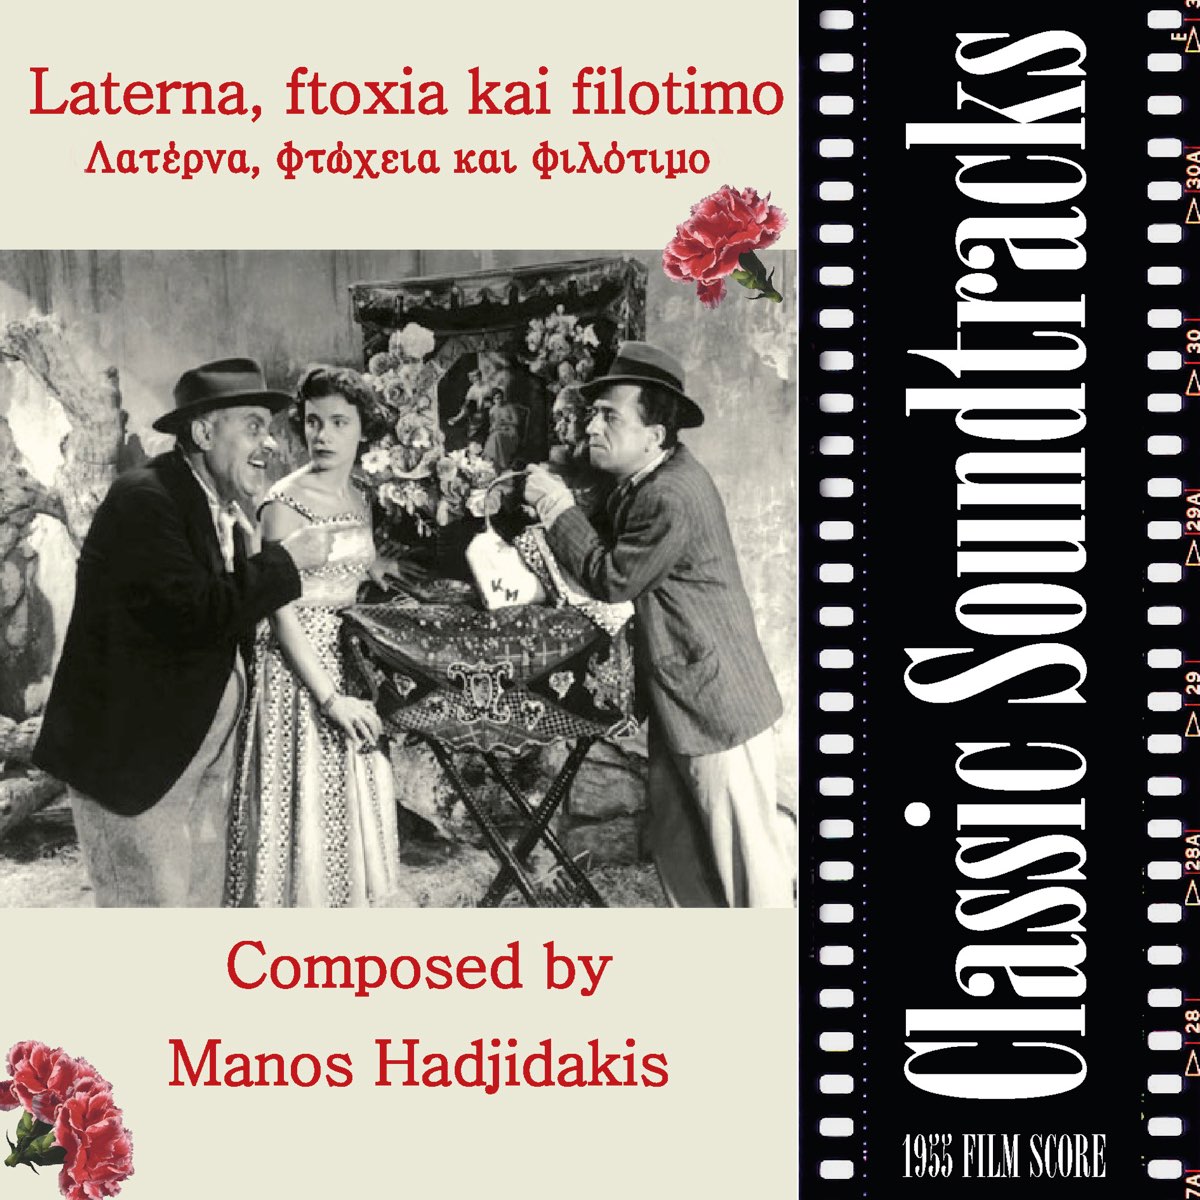 Laterna, ftoxia kai filotimo [Λατέρνα, φτώχεια και φιλότιμο] (1955 Film  Score) - Album by Manos Hadjidakis Ensemble - Apple Music